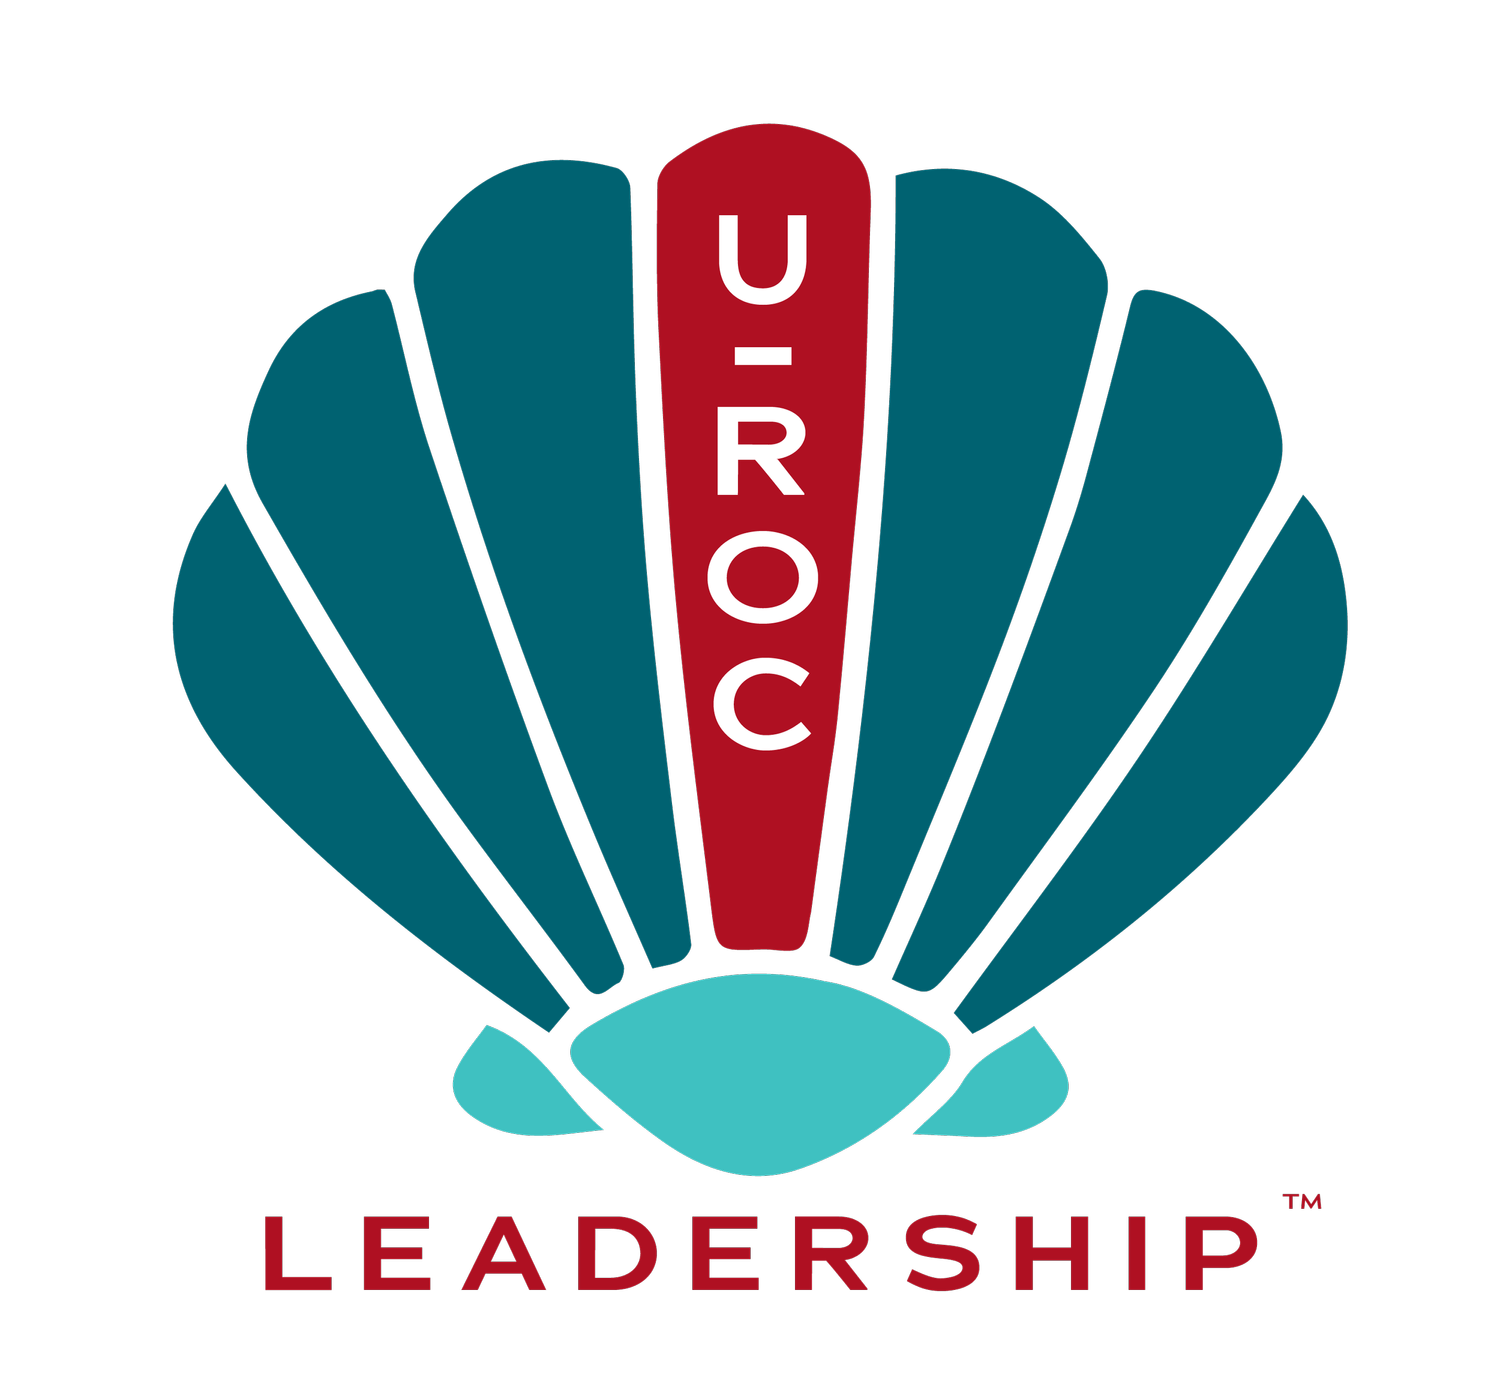 U-Roc Leadership™ Program